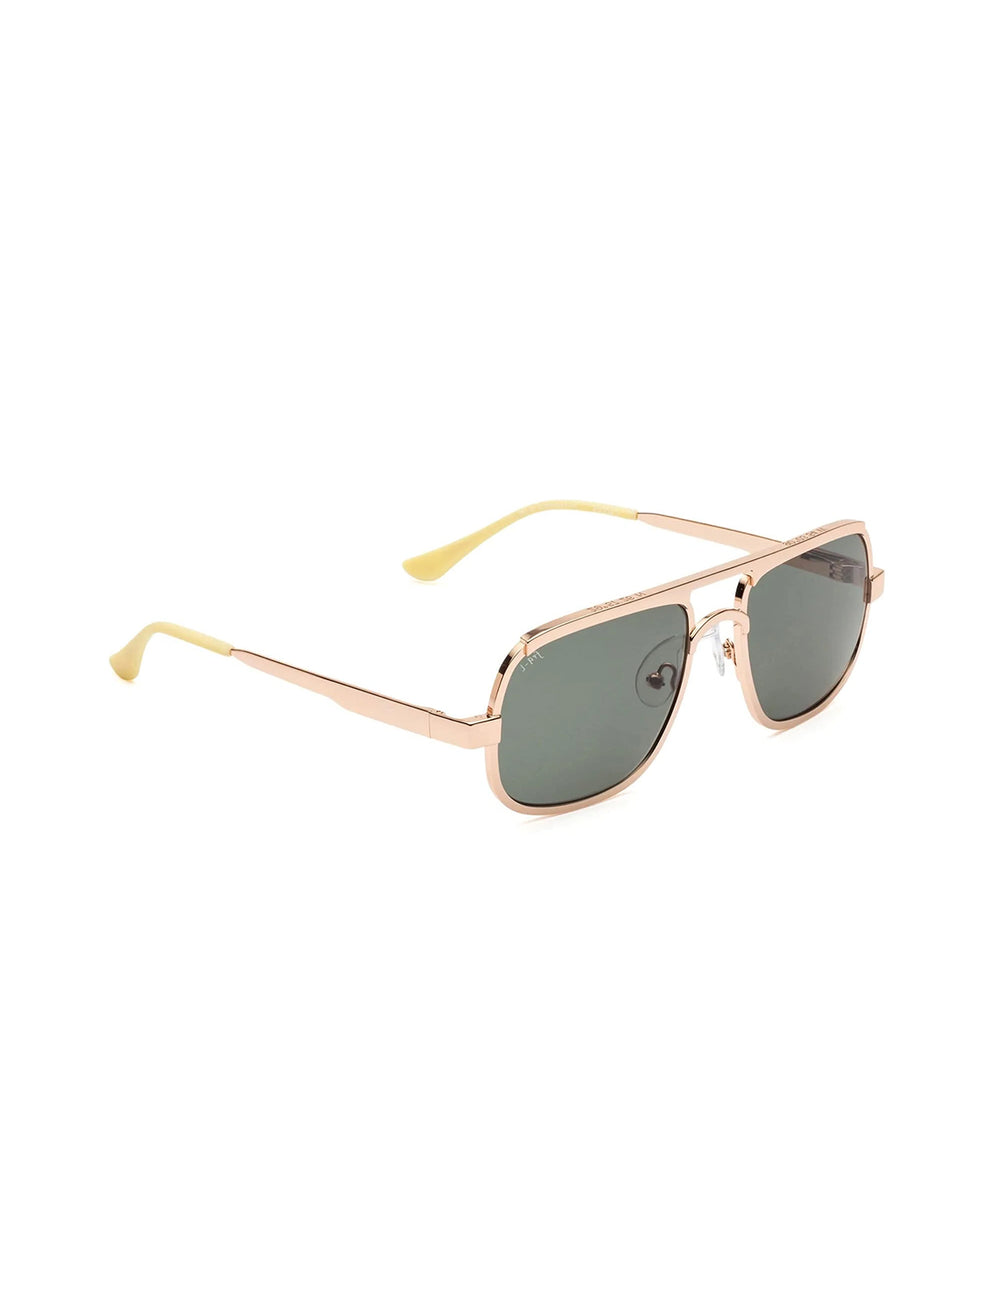 Side angle view of Caddis' nola progressive sunglasses in polished rose gold.